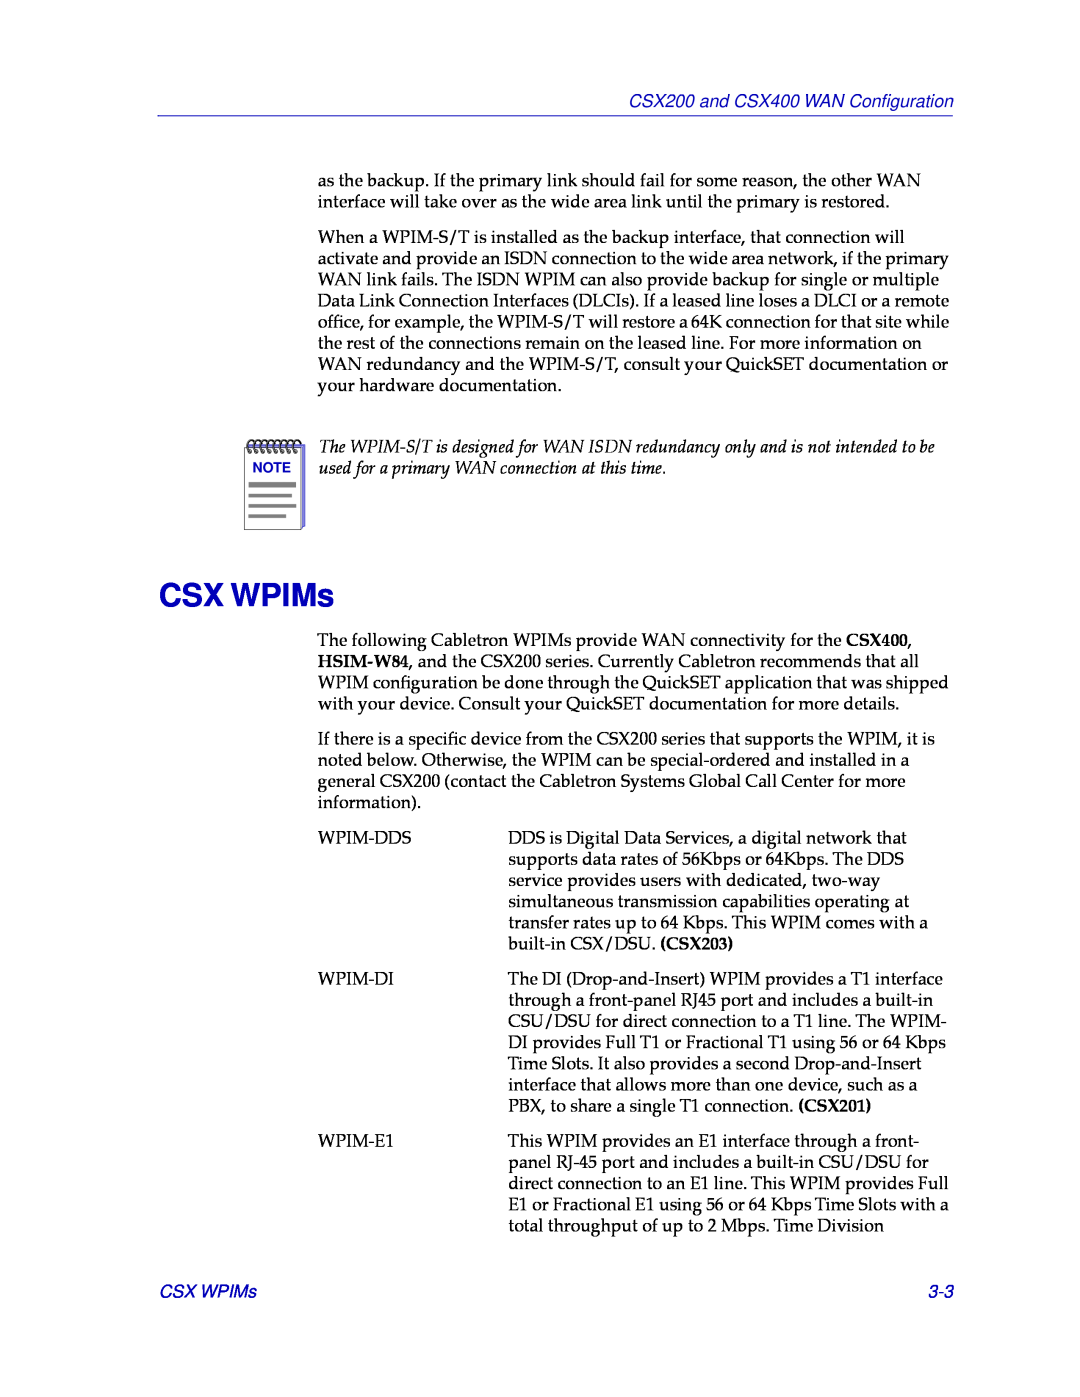 Cabletron Systems manual CSX WPIMs, CSX200 and CSX400 WAN Conﬁguration 